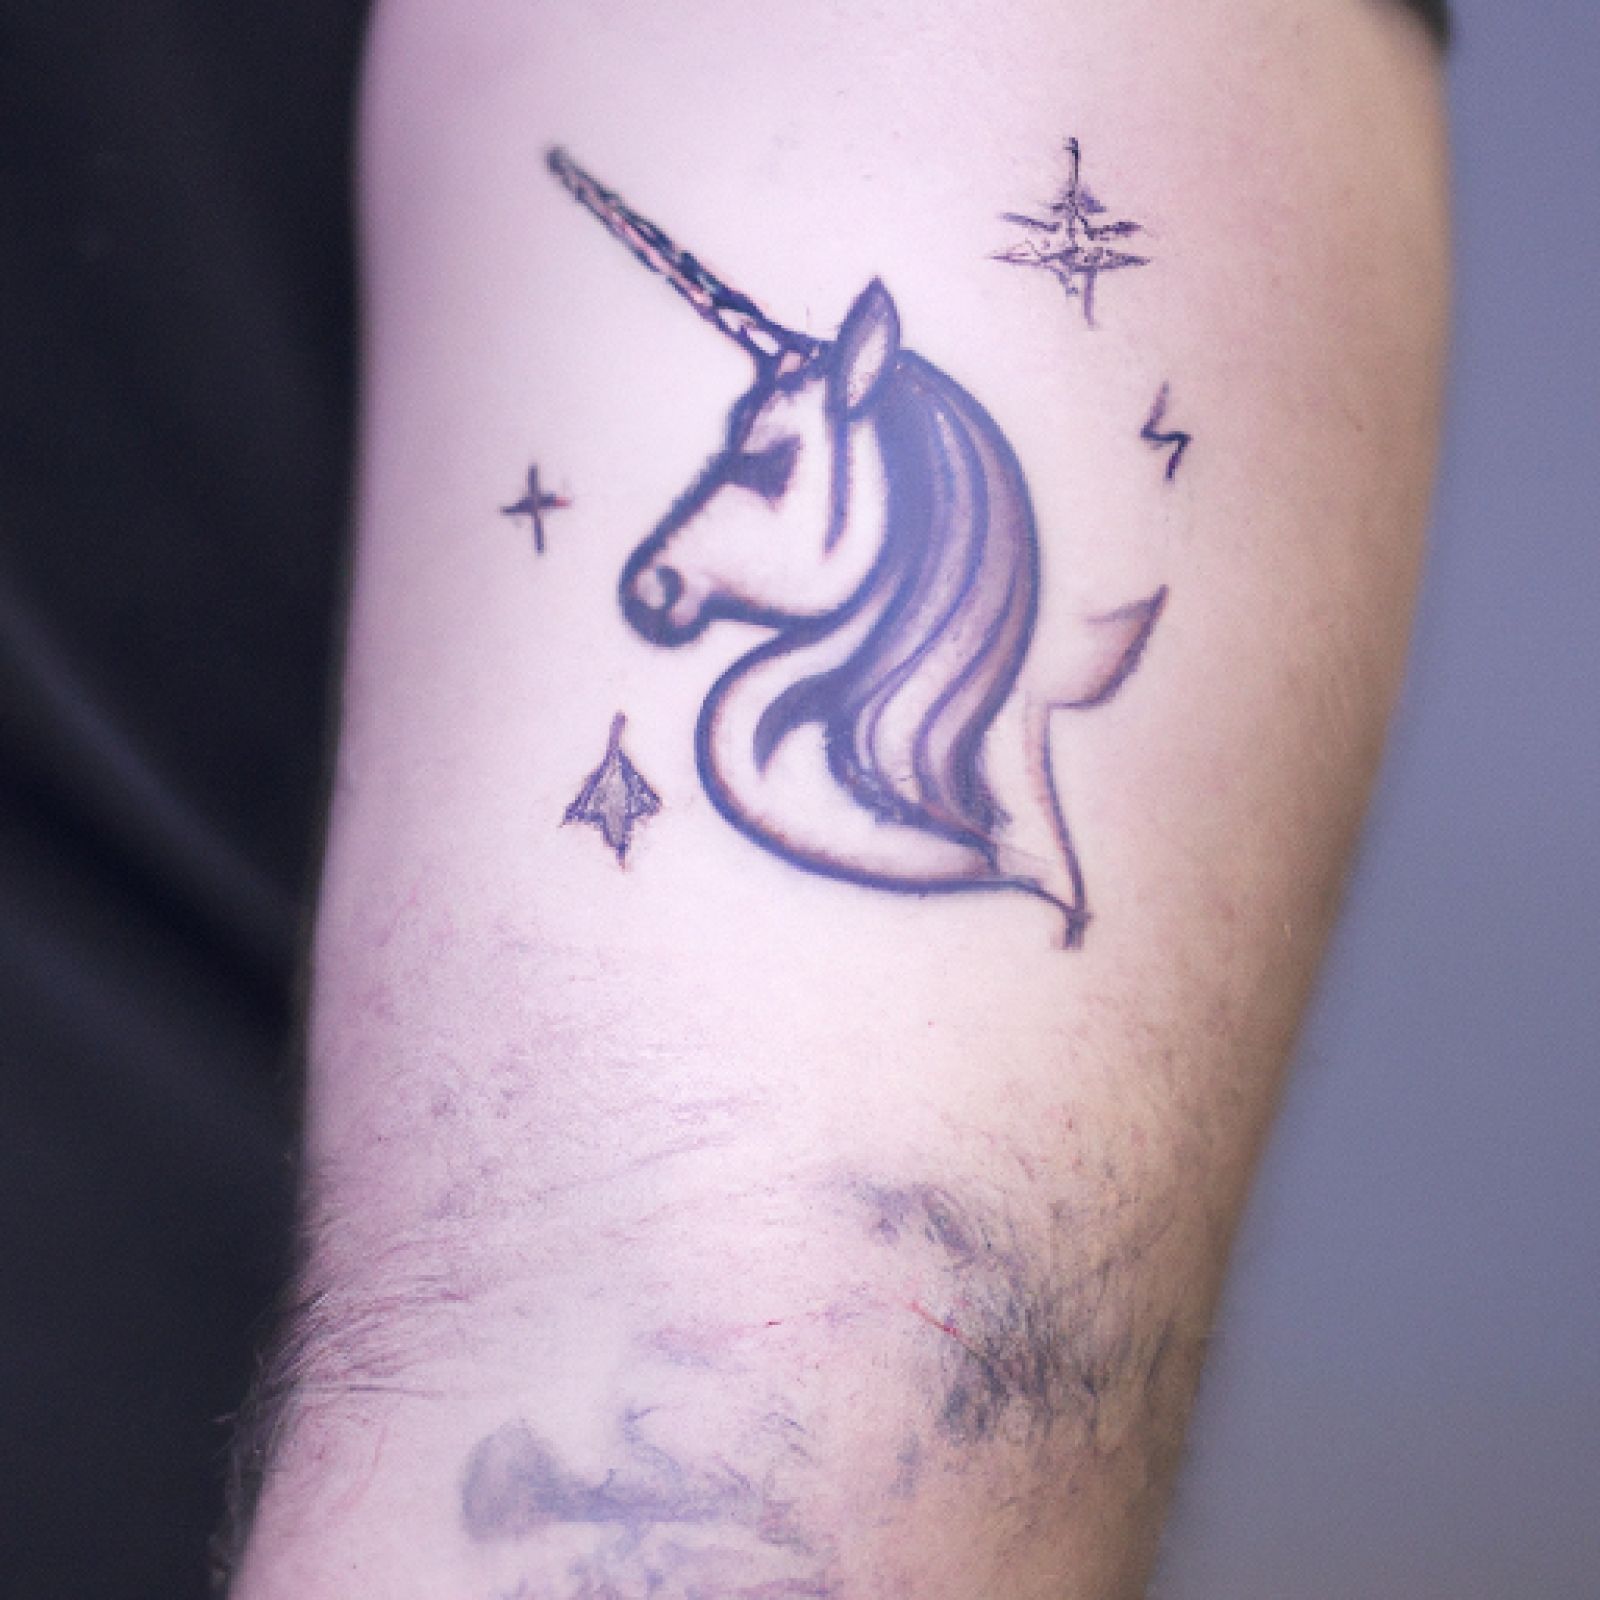 Unicorn tattoo on arm for men